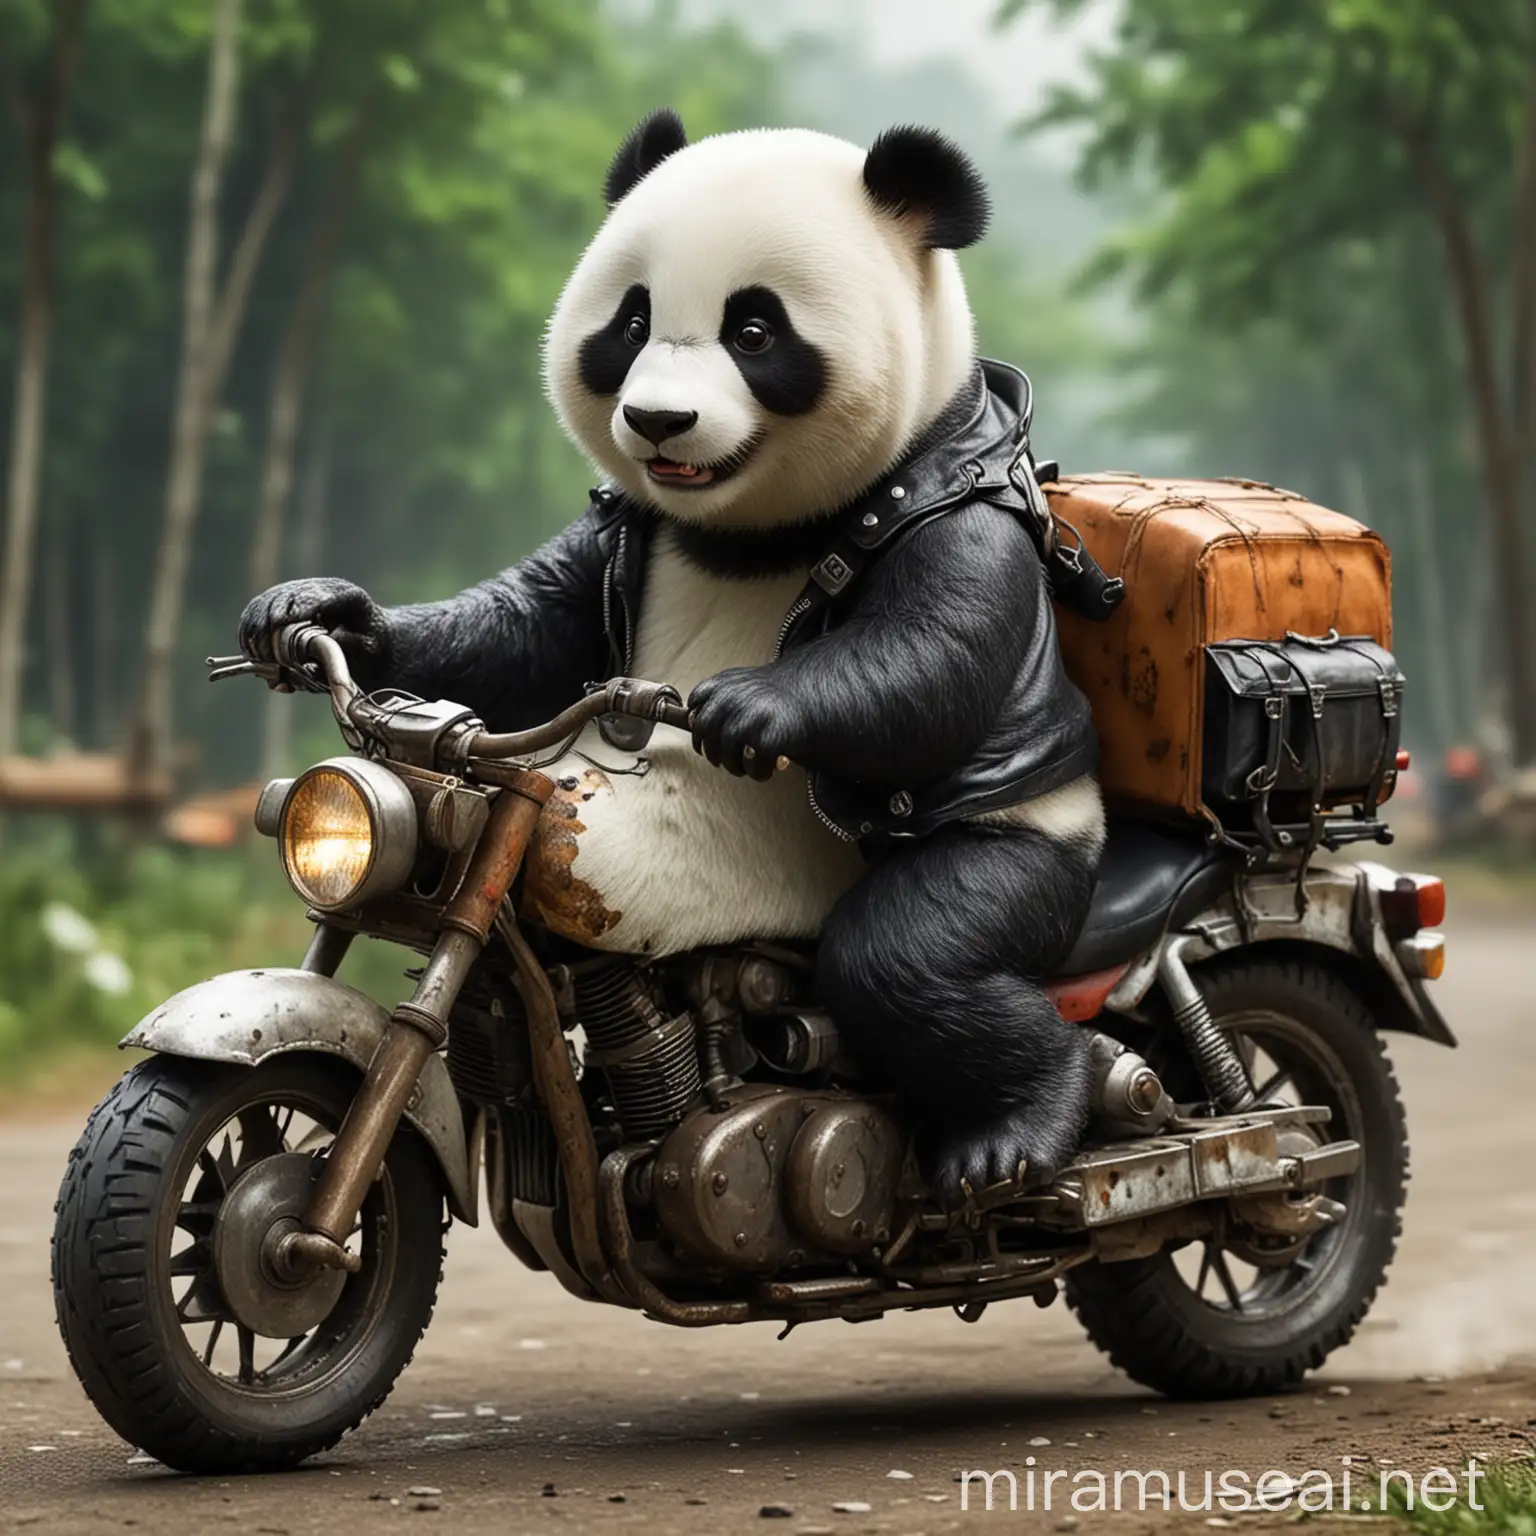 Panda Riding Motorcycle Through Bamboo Forest